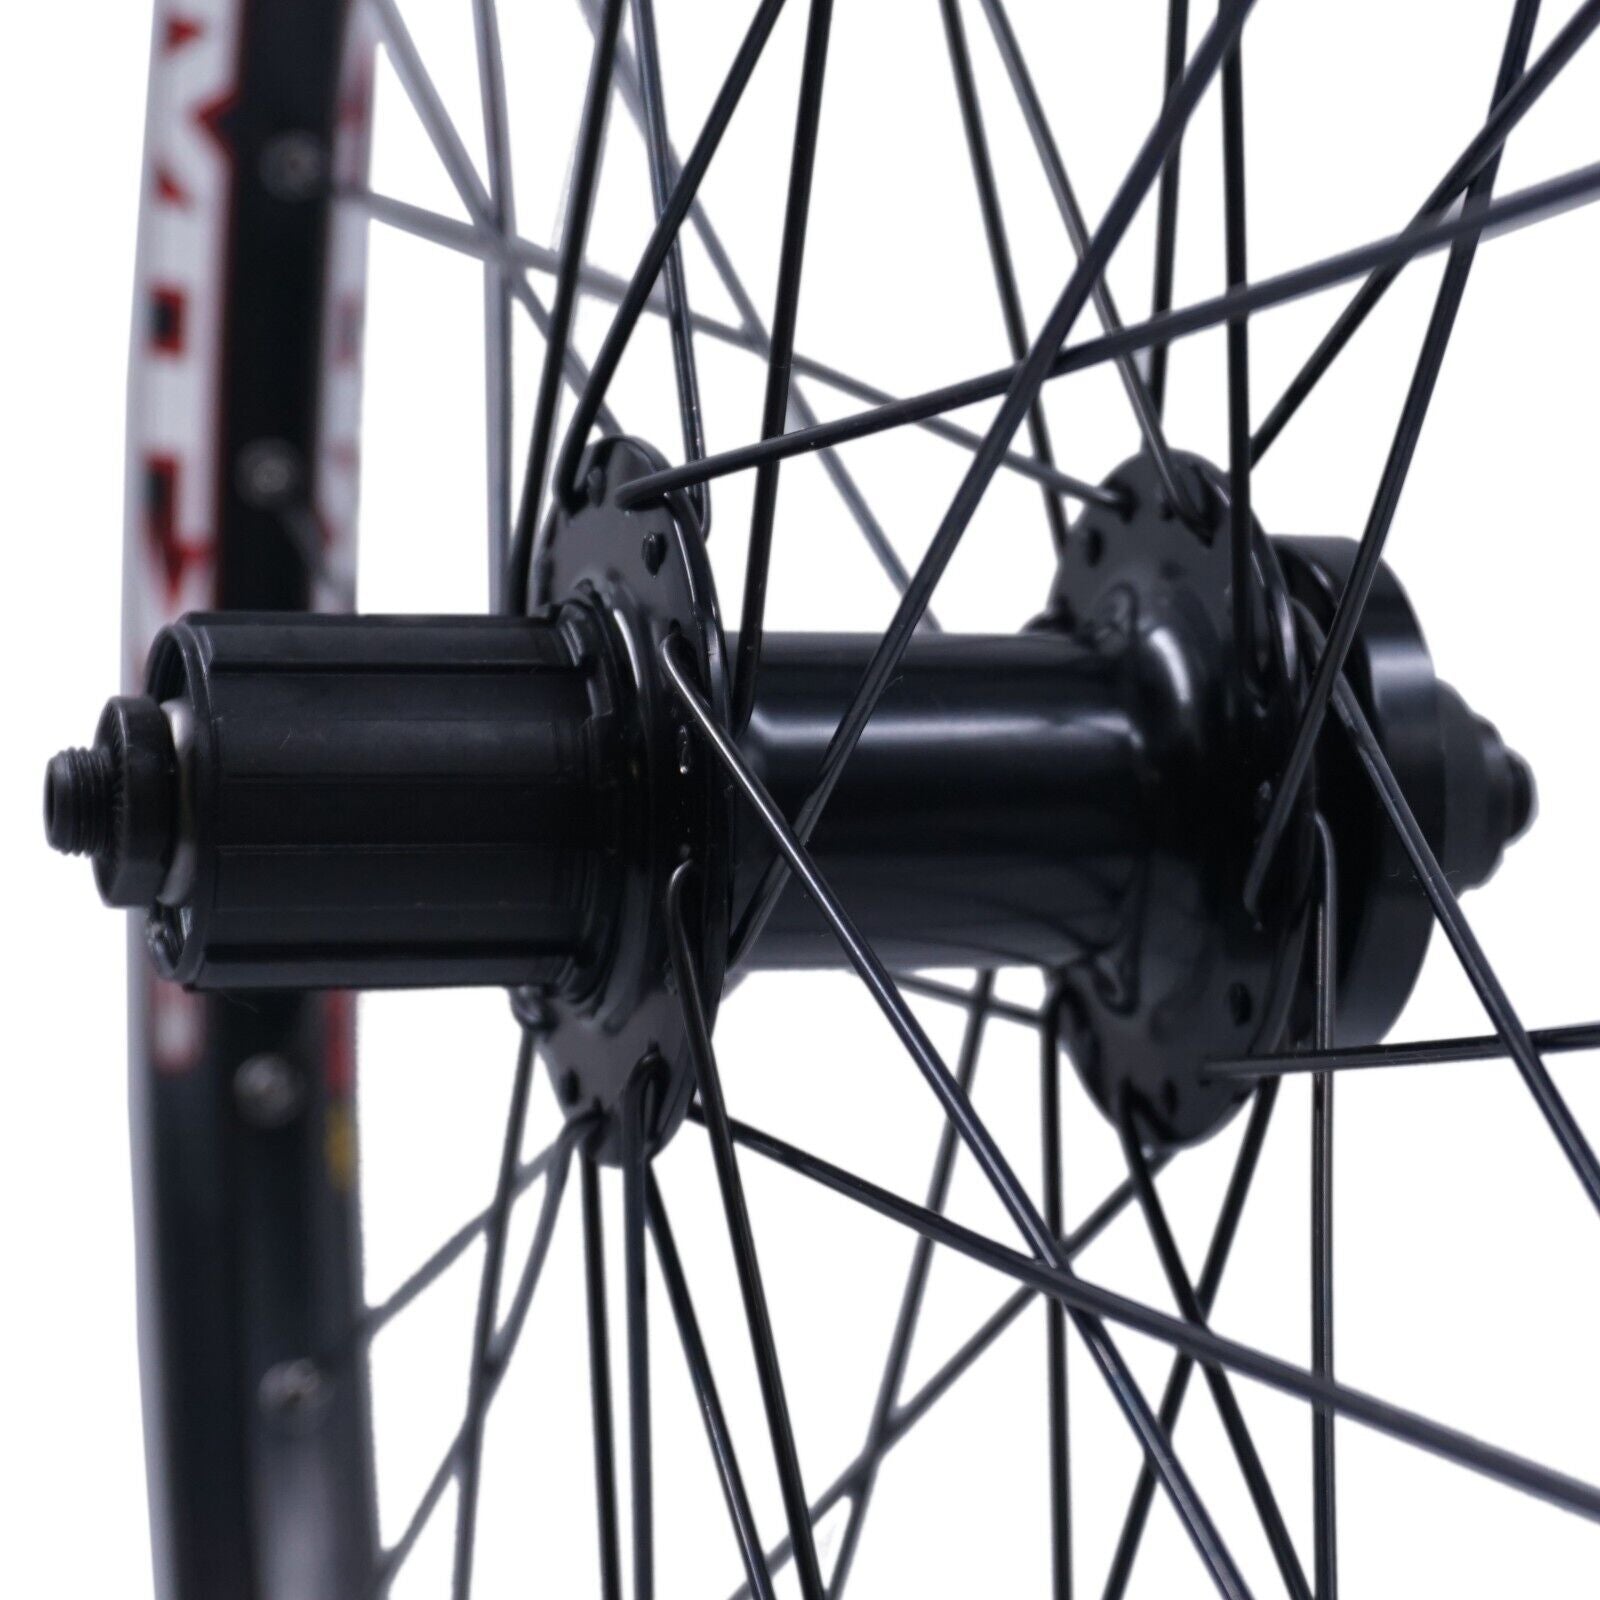 Sun Ringle Black MTX33 26" Rear Disc Wheel - The Bikesmiths